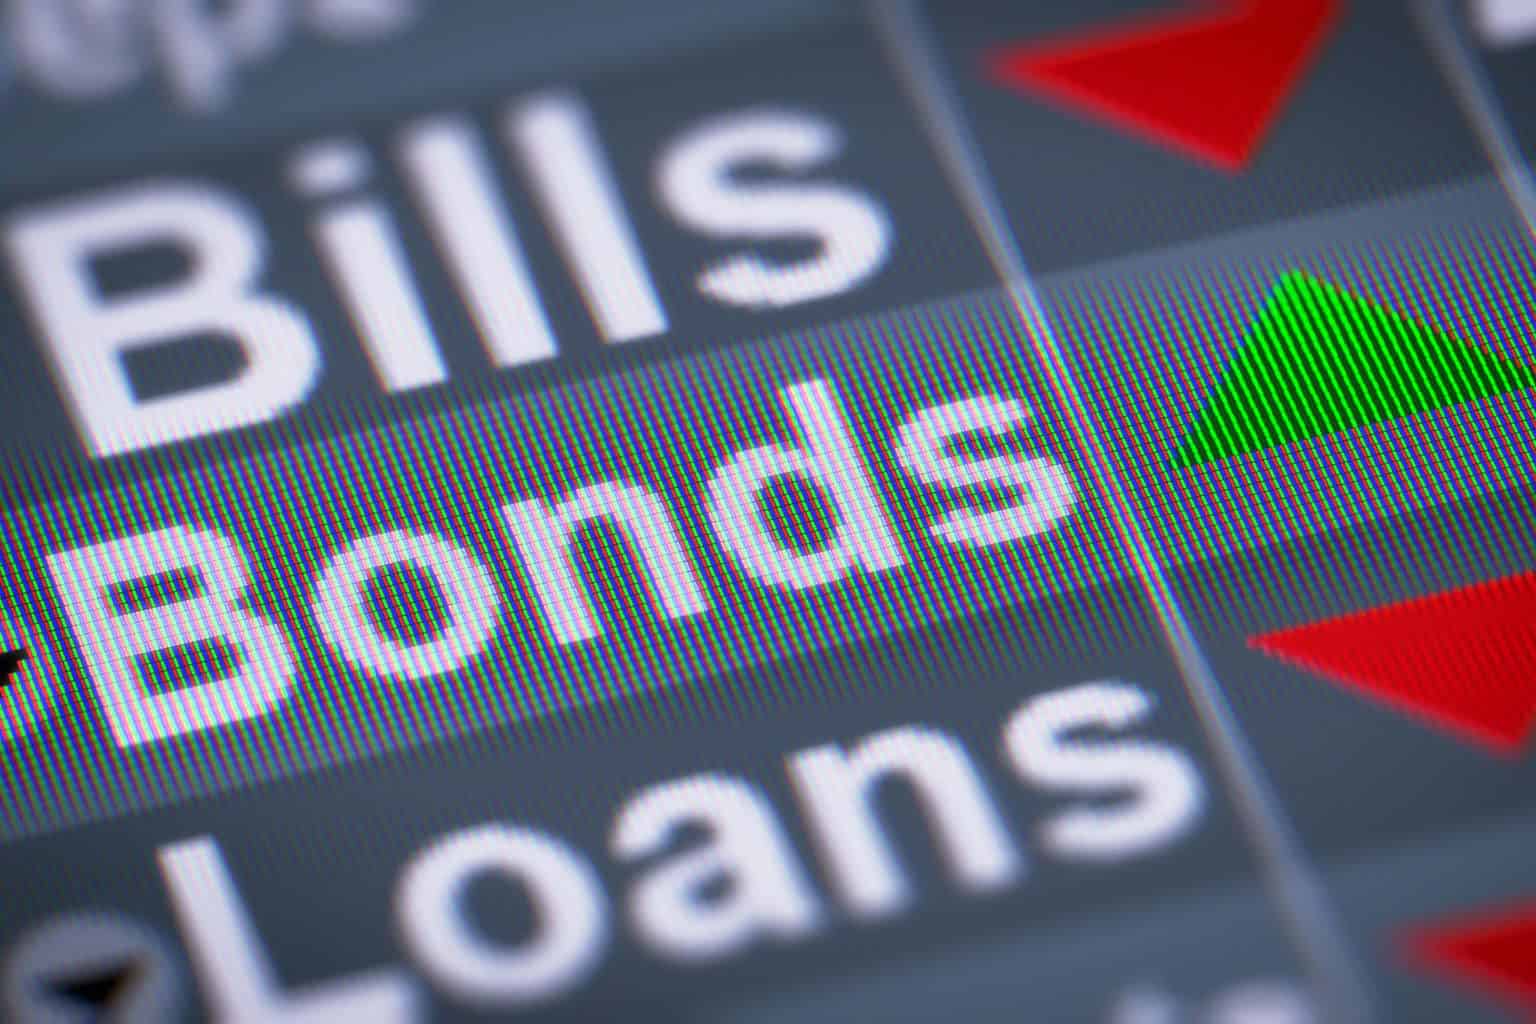 Barclay’s Data Shows $12 trillion Worth of Bonds Trading at Sub-Zero Levels